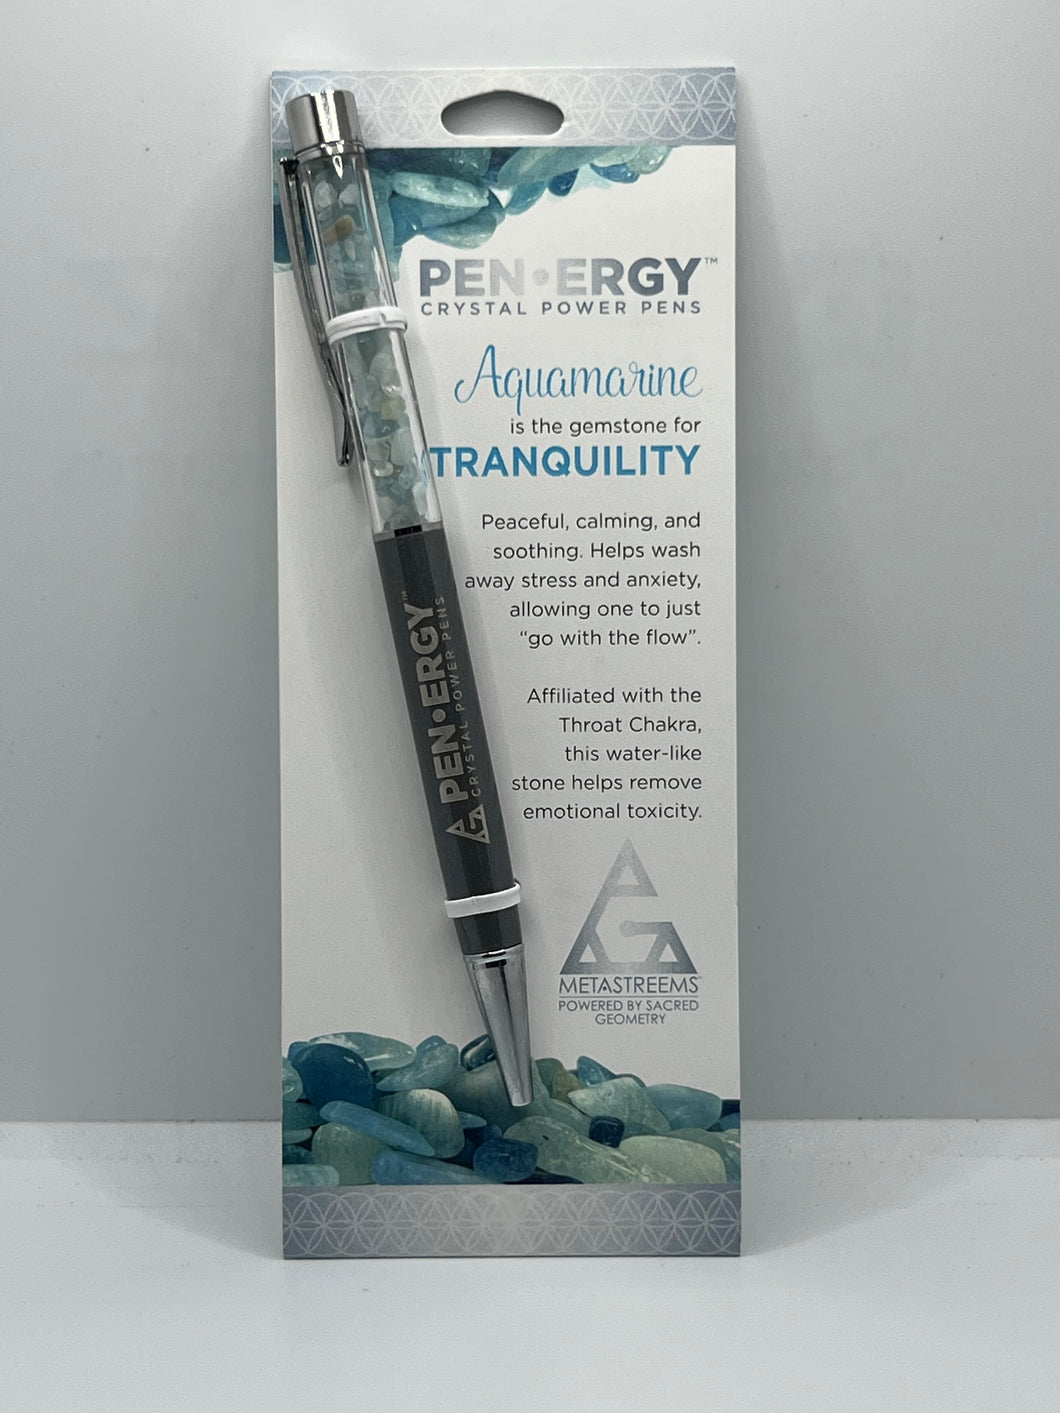 PEN-ERGY Tranquility (Aquamarine) 